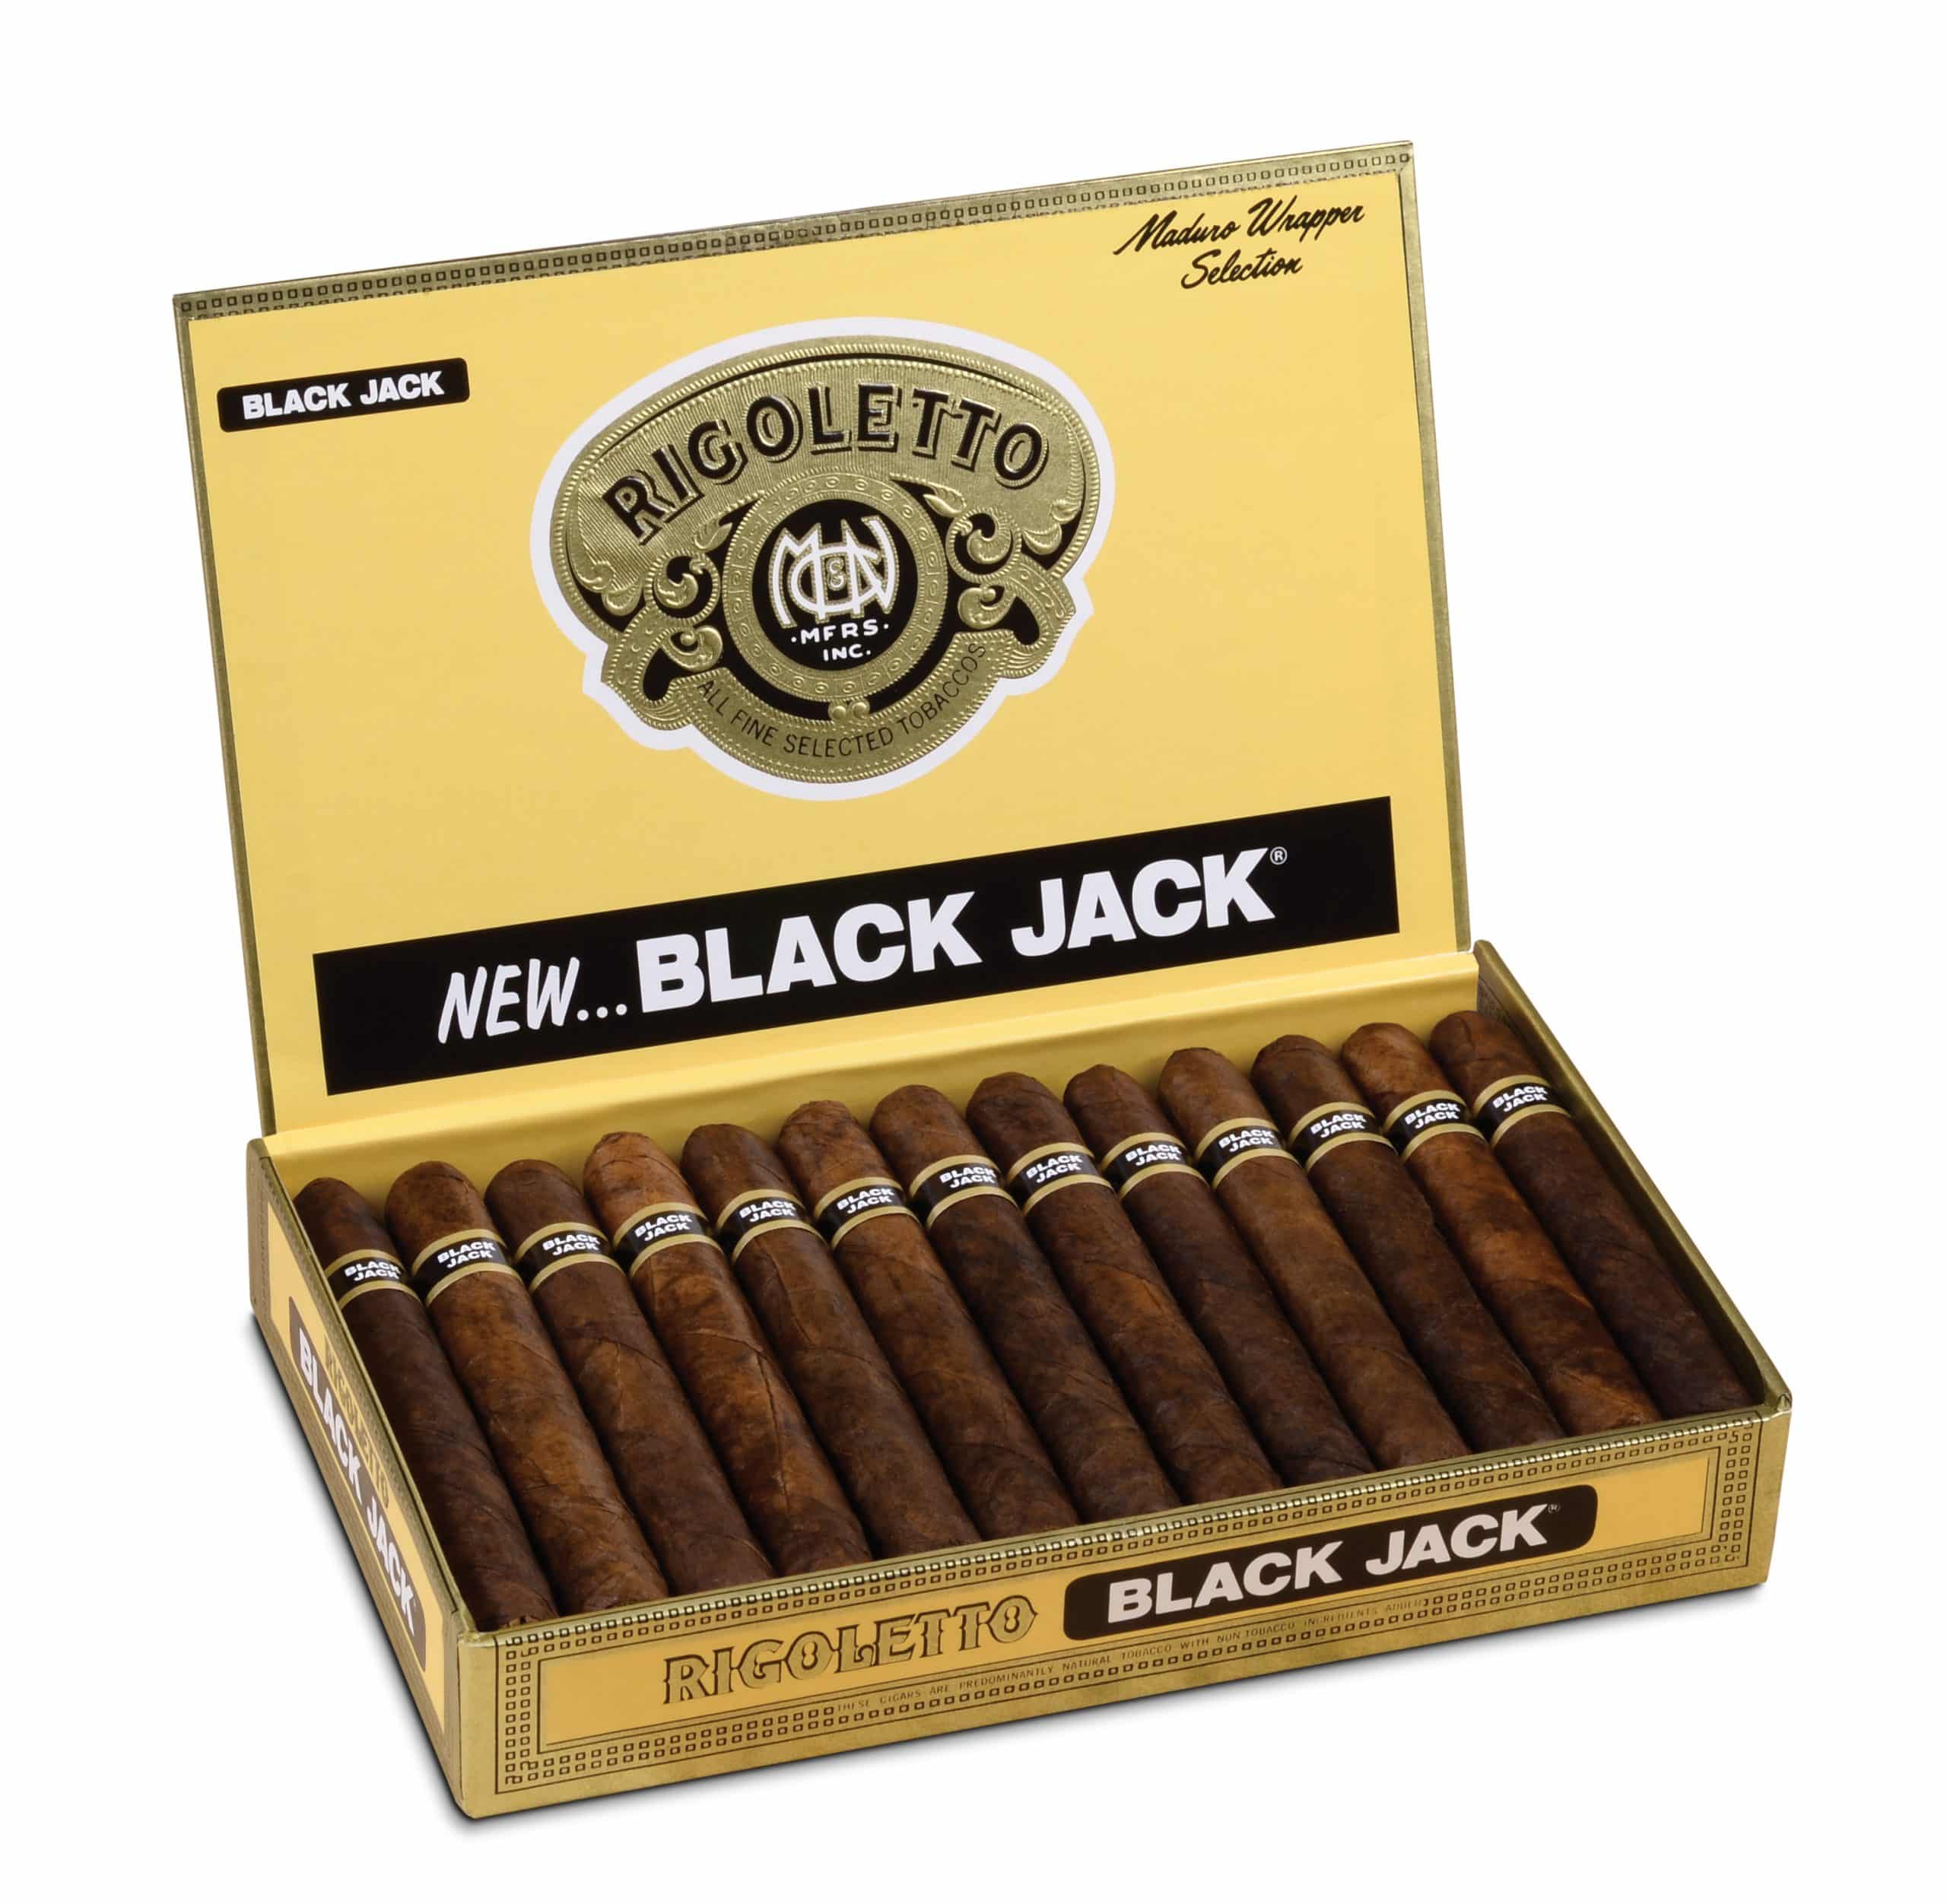 rigoletto black jack box opened